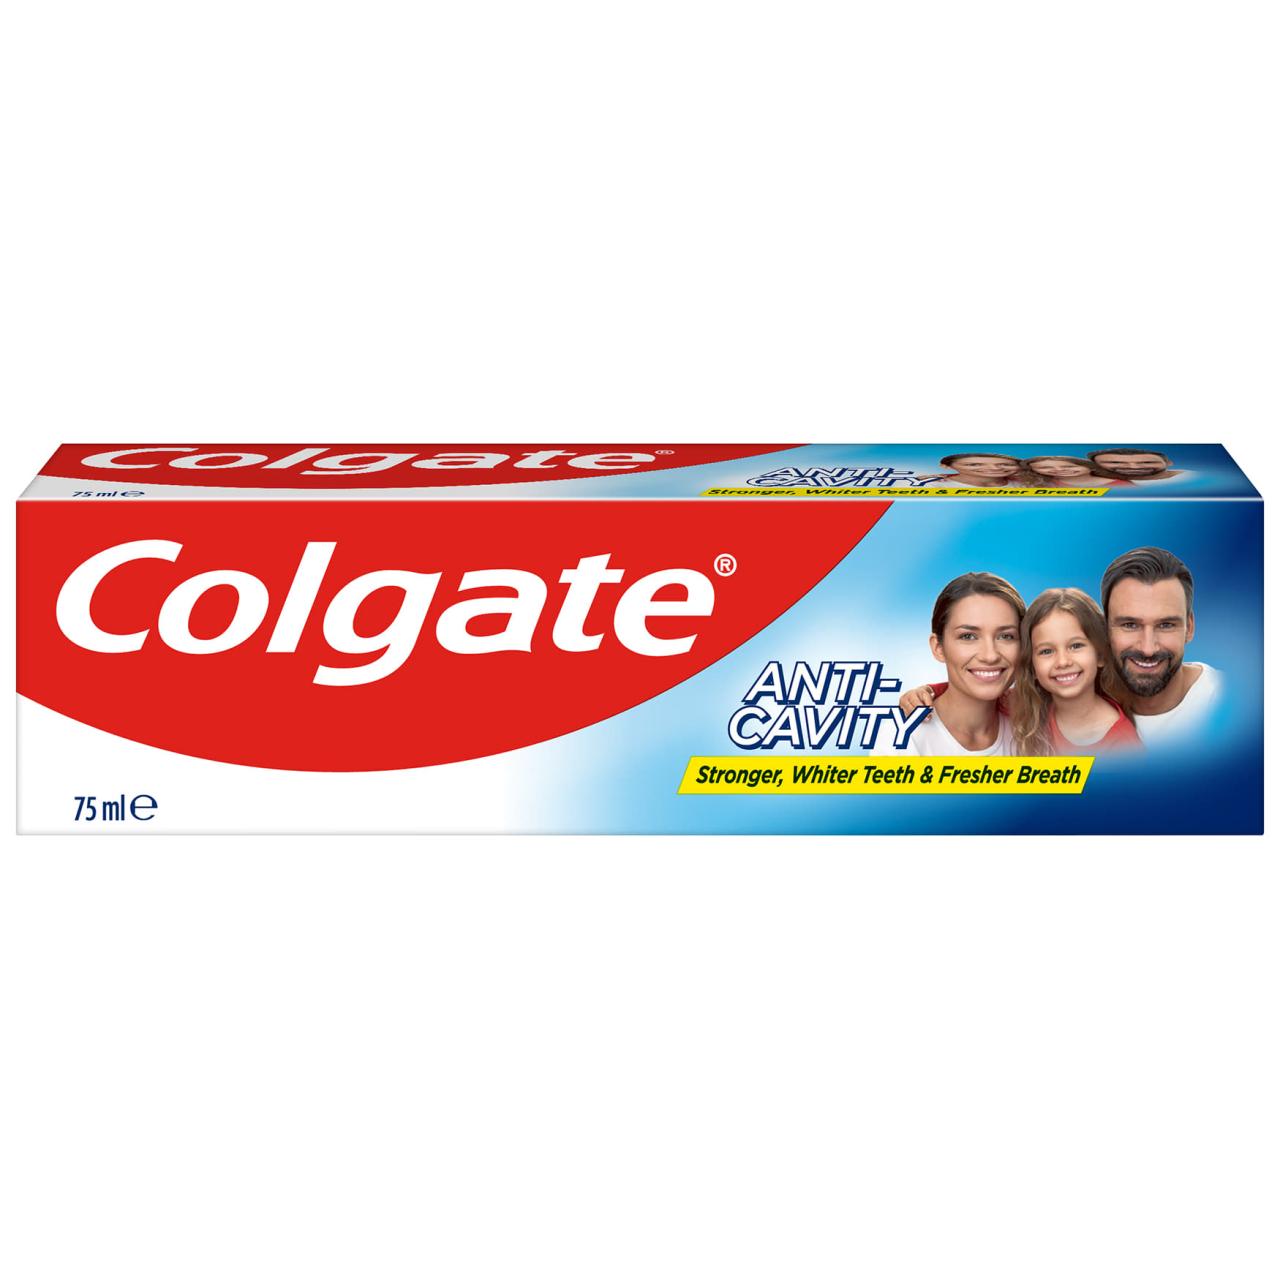 Colgate Tandpasta/Zahnpasta Cavity Protection 75ml